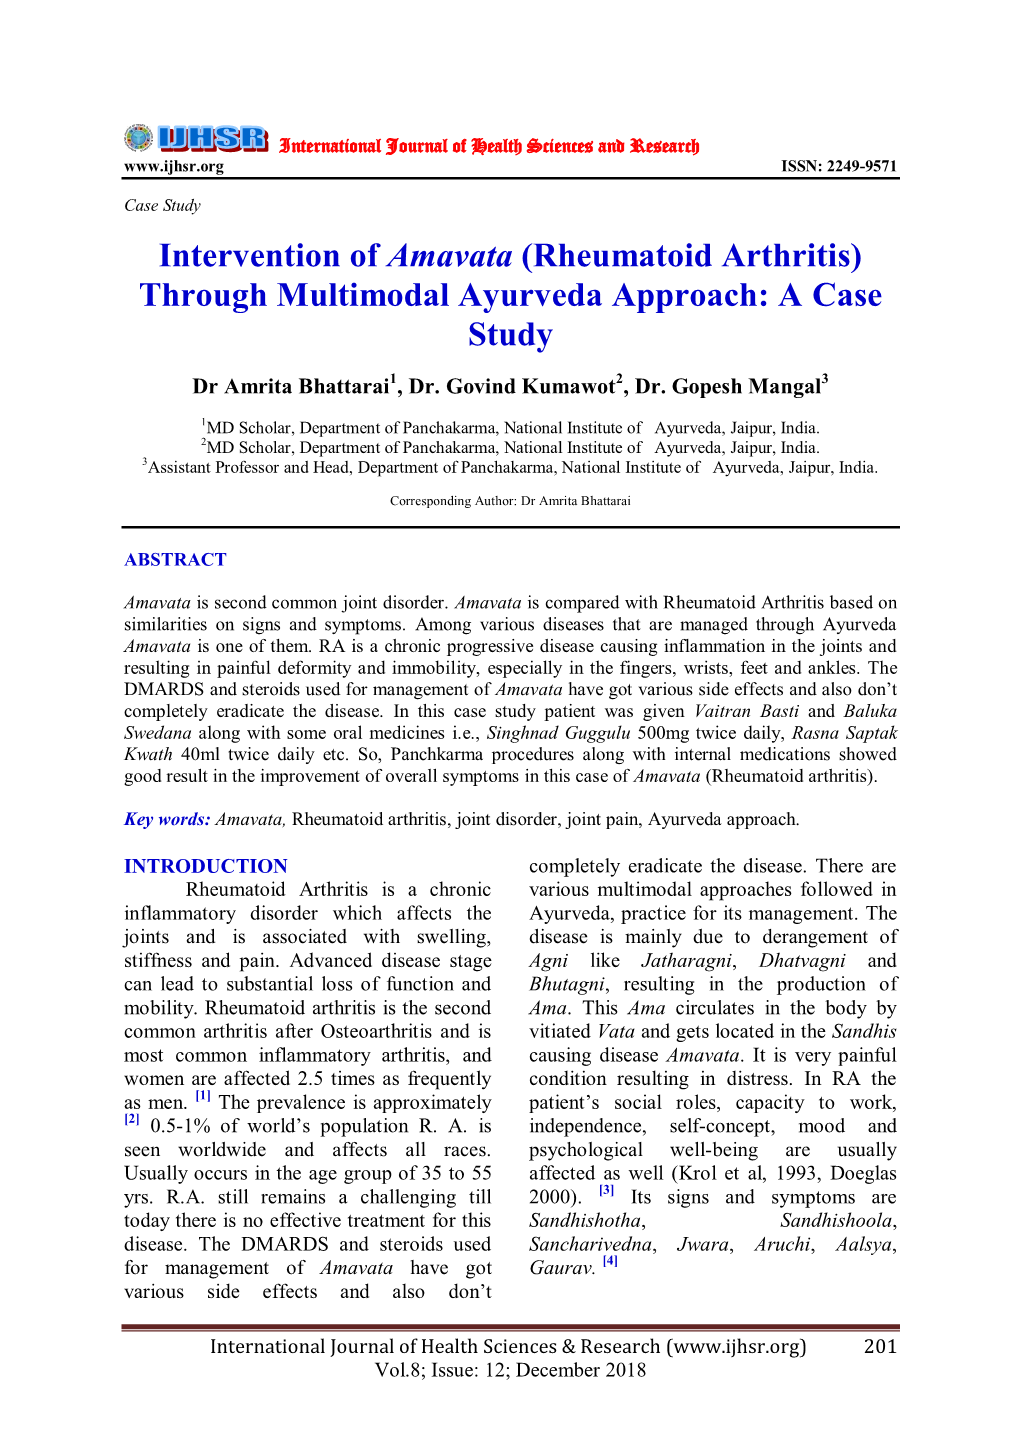 Rheumatoid Arthritis) Through Multimodal Ayurveda Approach: a Case Study